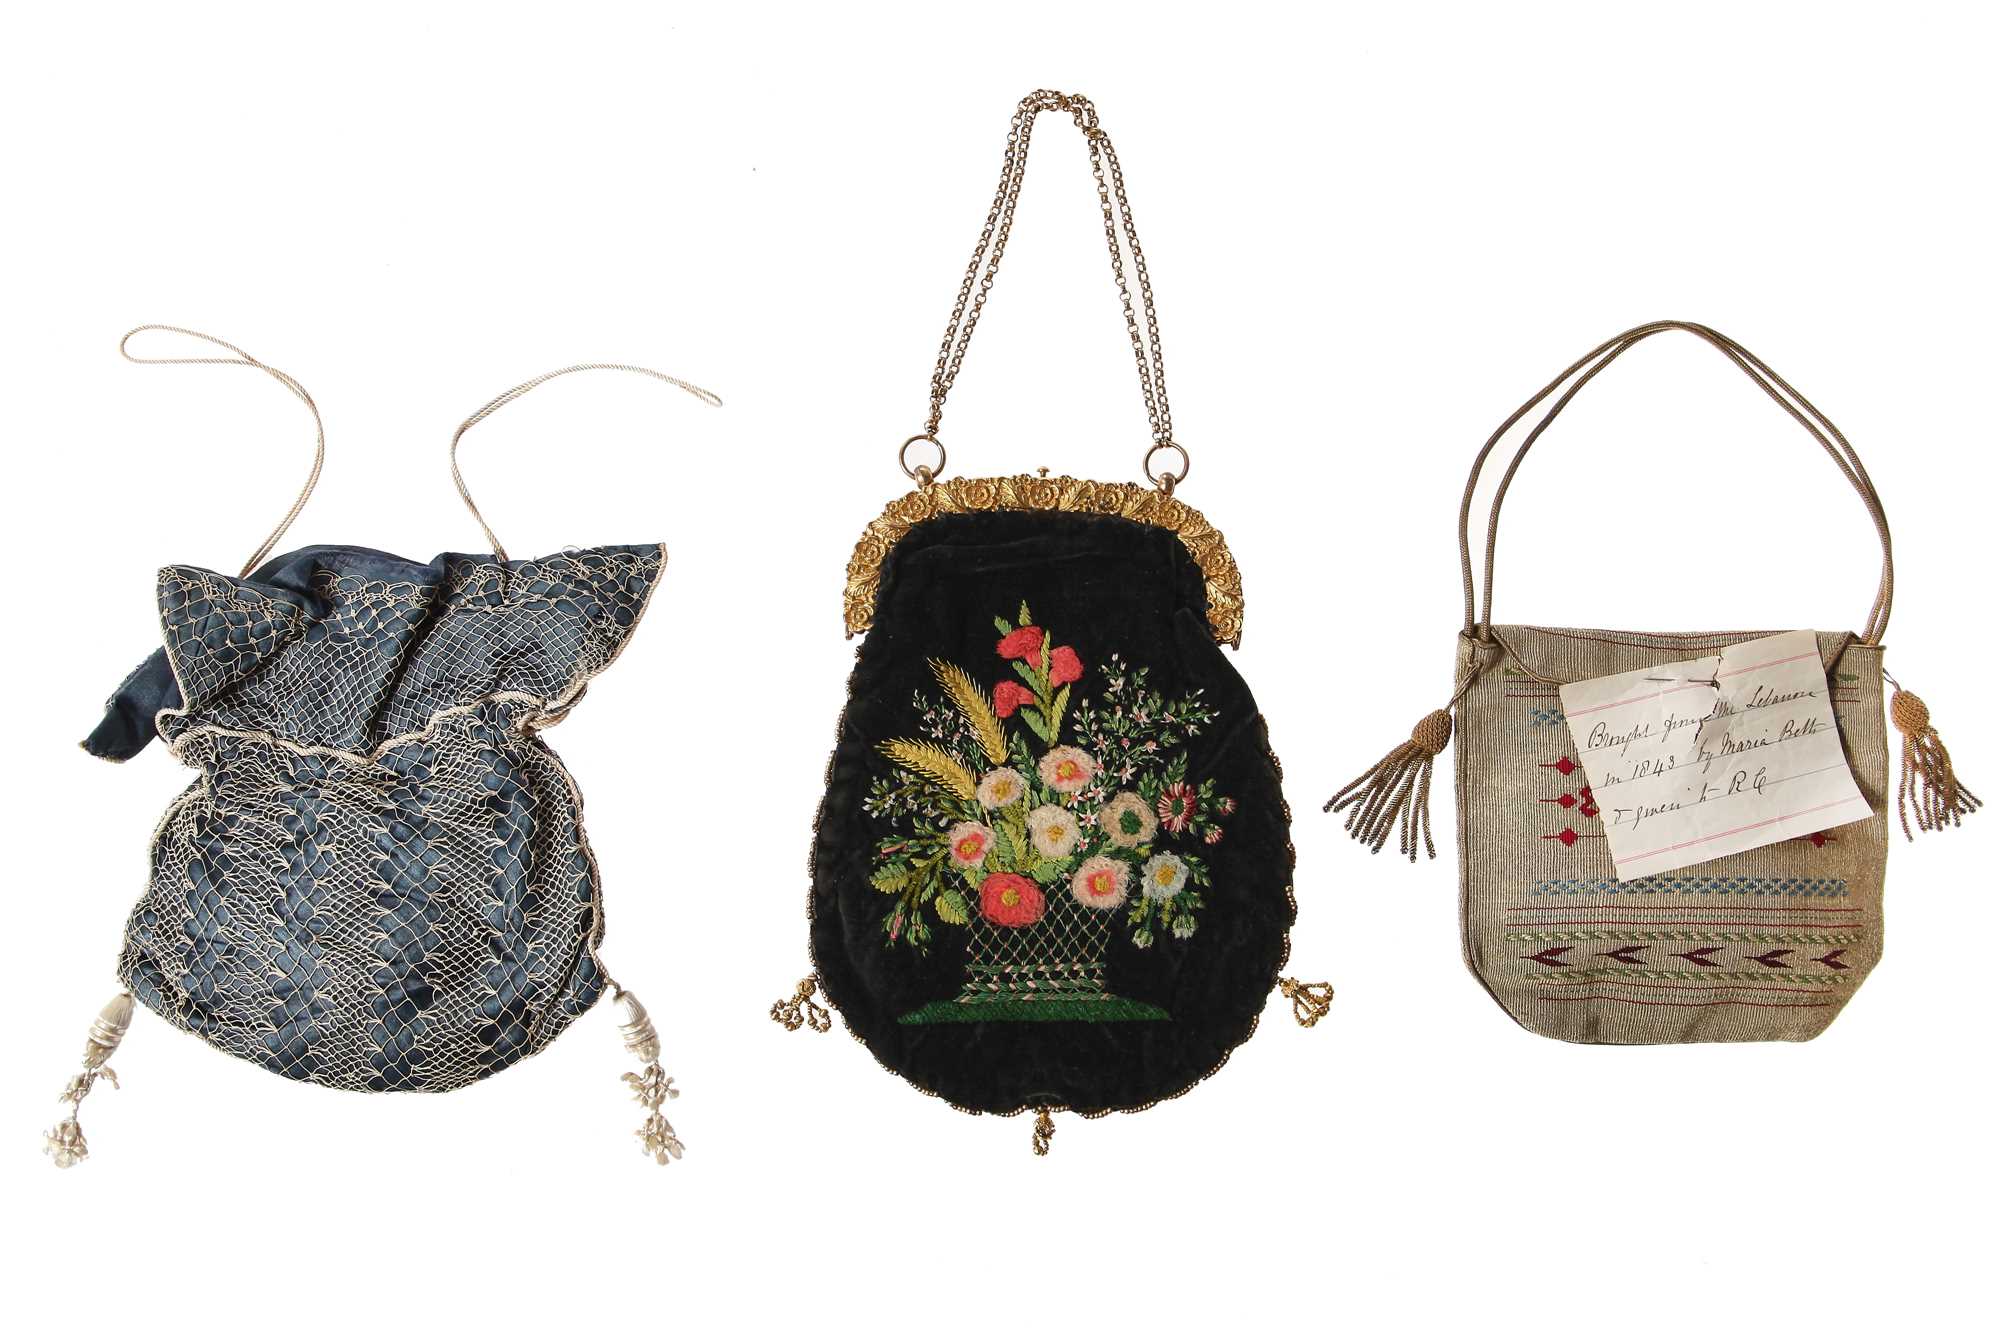 KARRESLY Women's Shoulder Bags Travel Handbag India | Ubuy